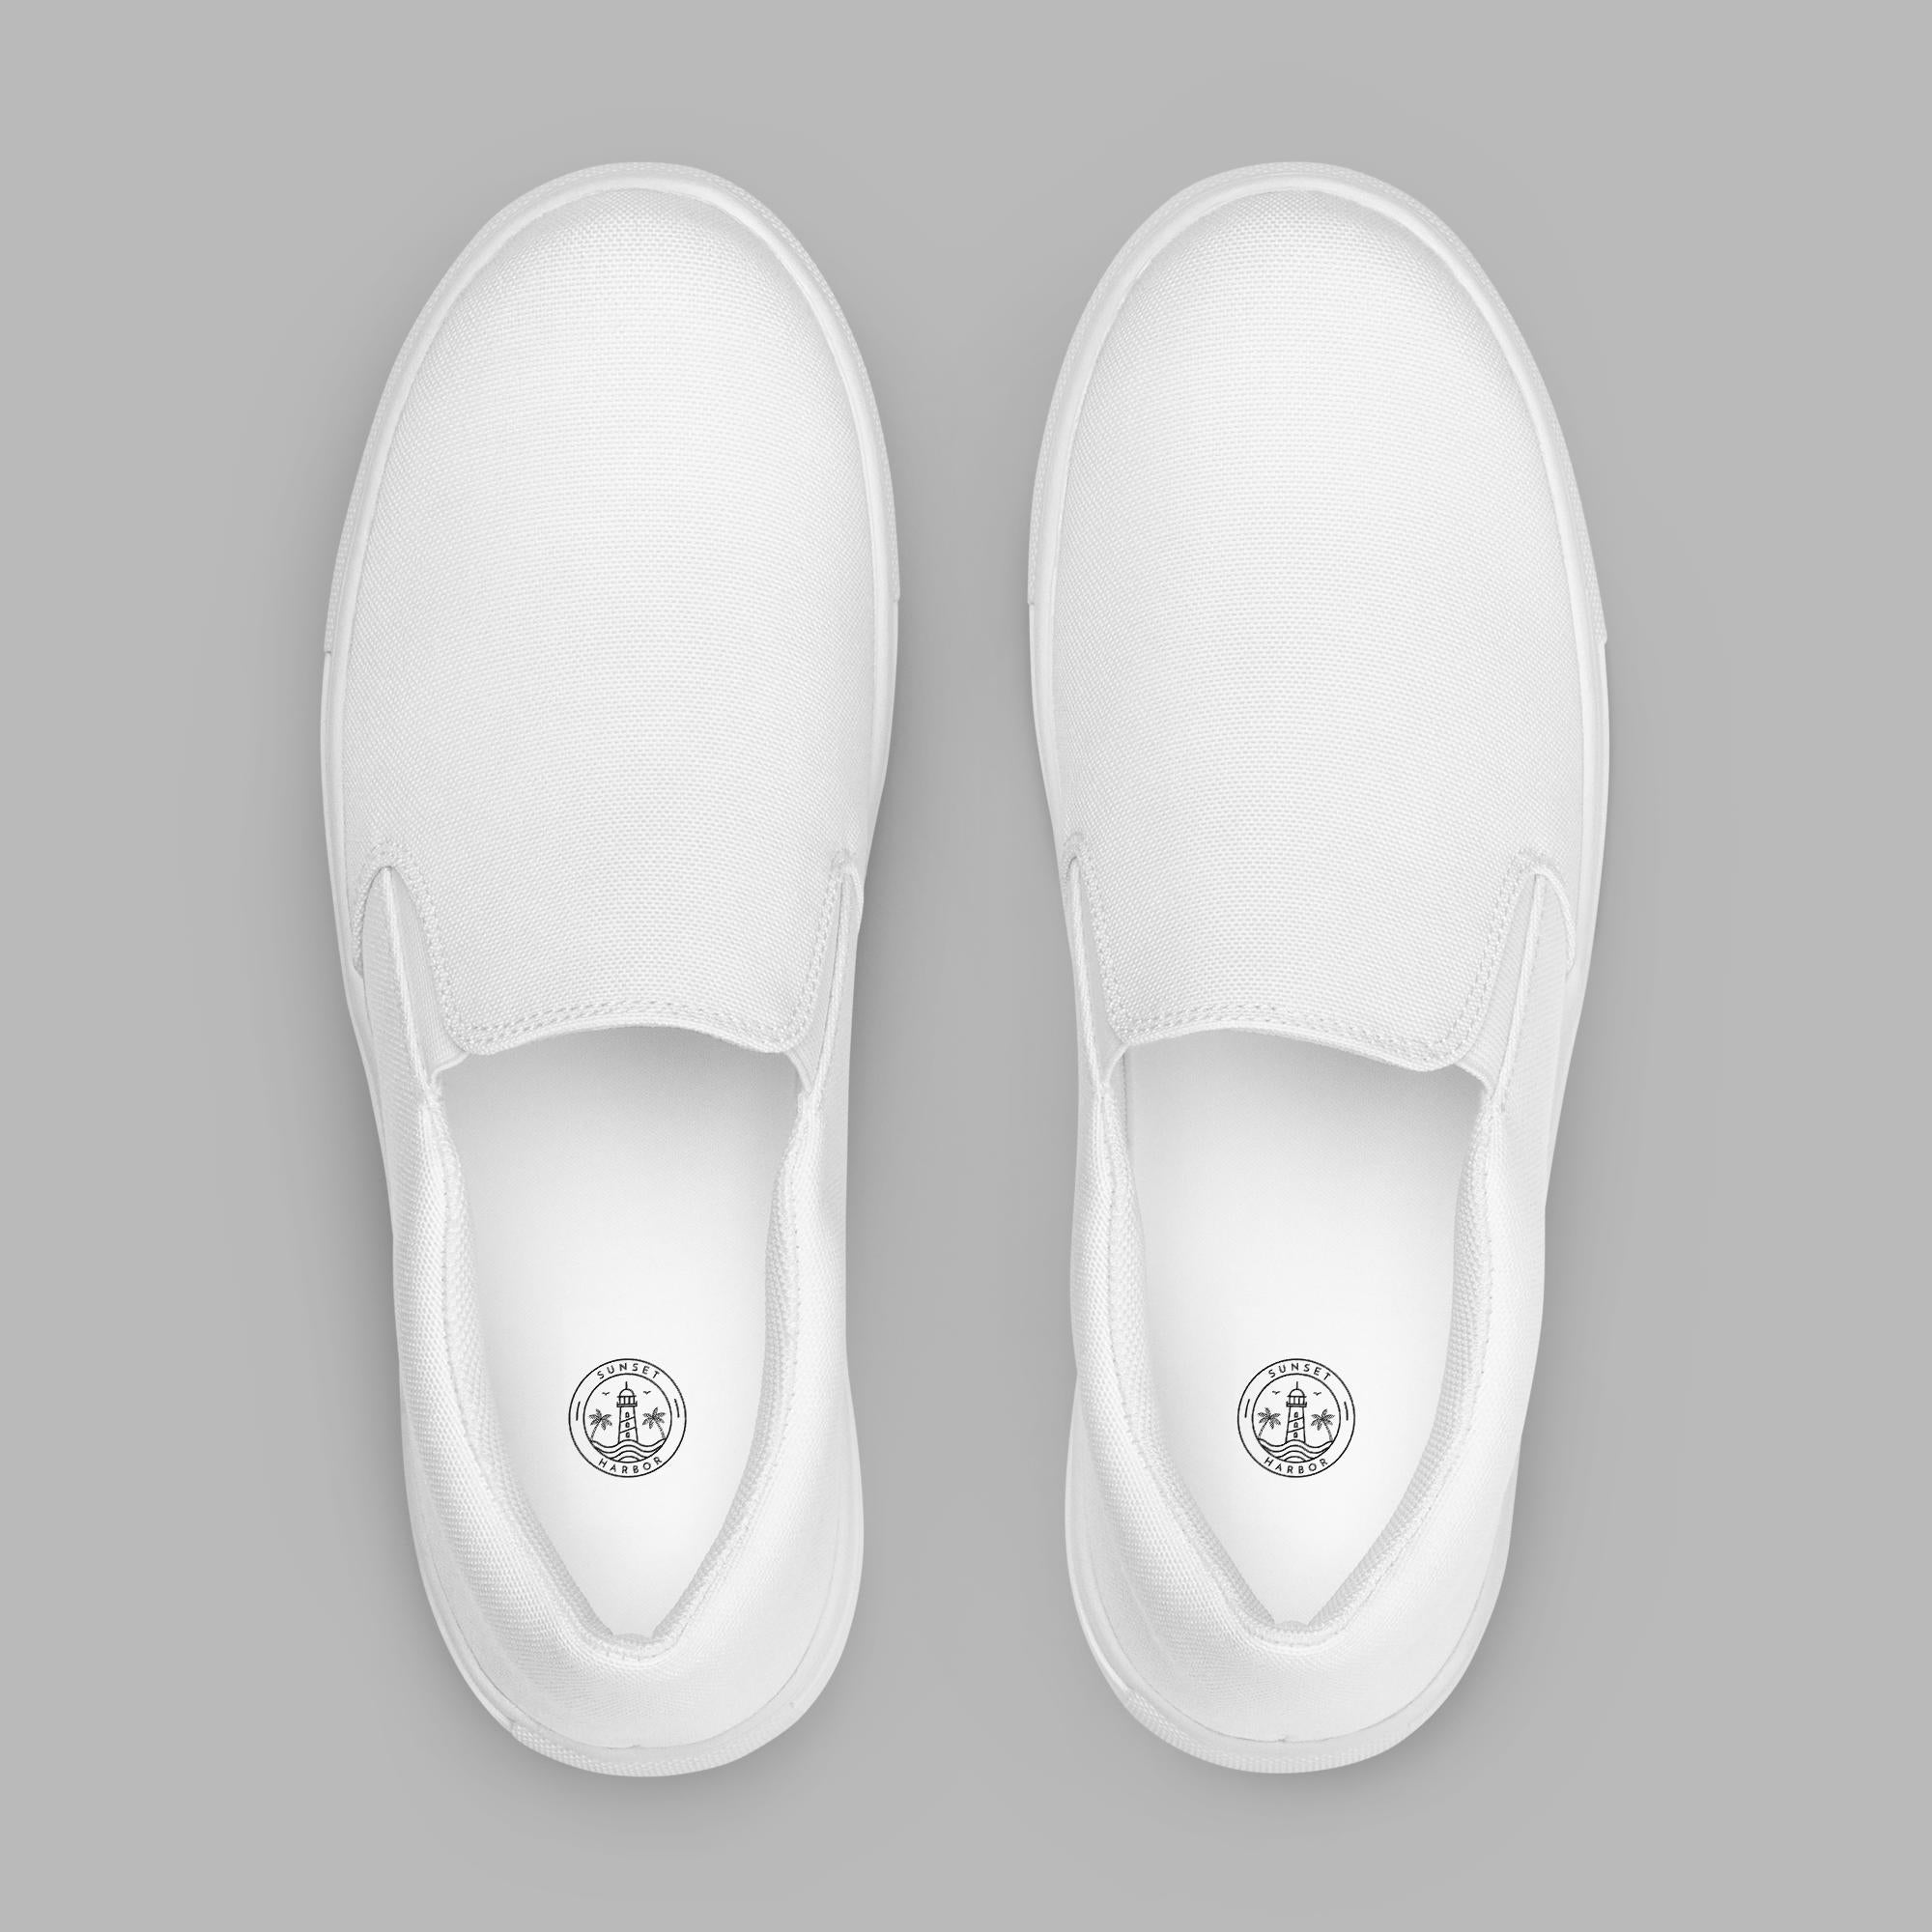 Men’s slip-on canvas shoes - White